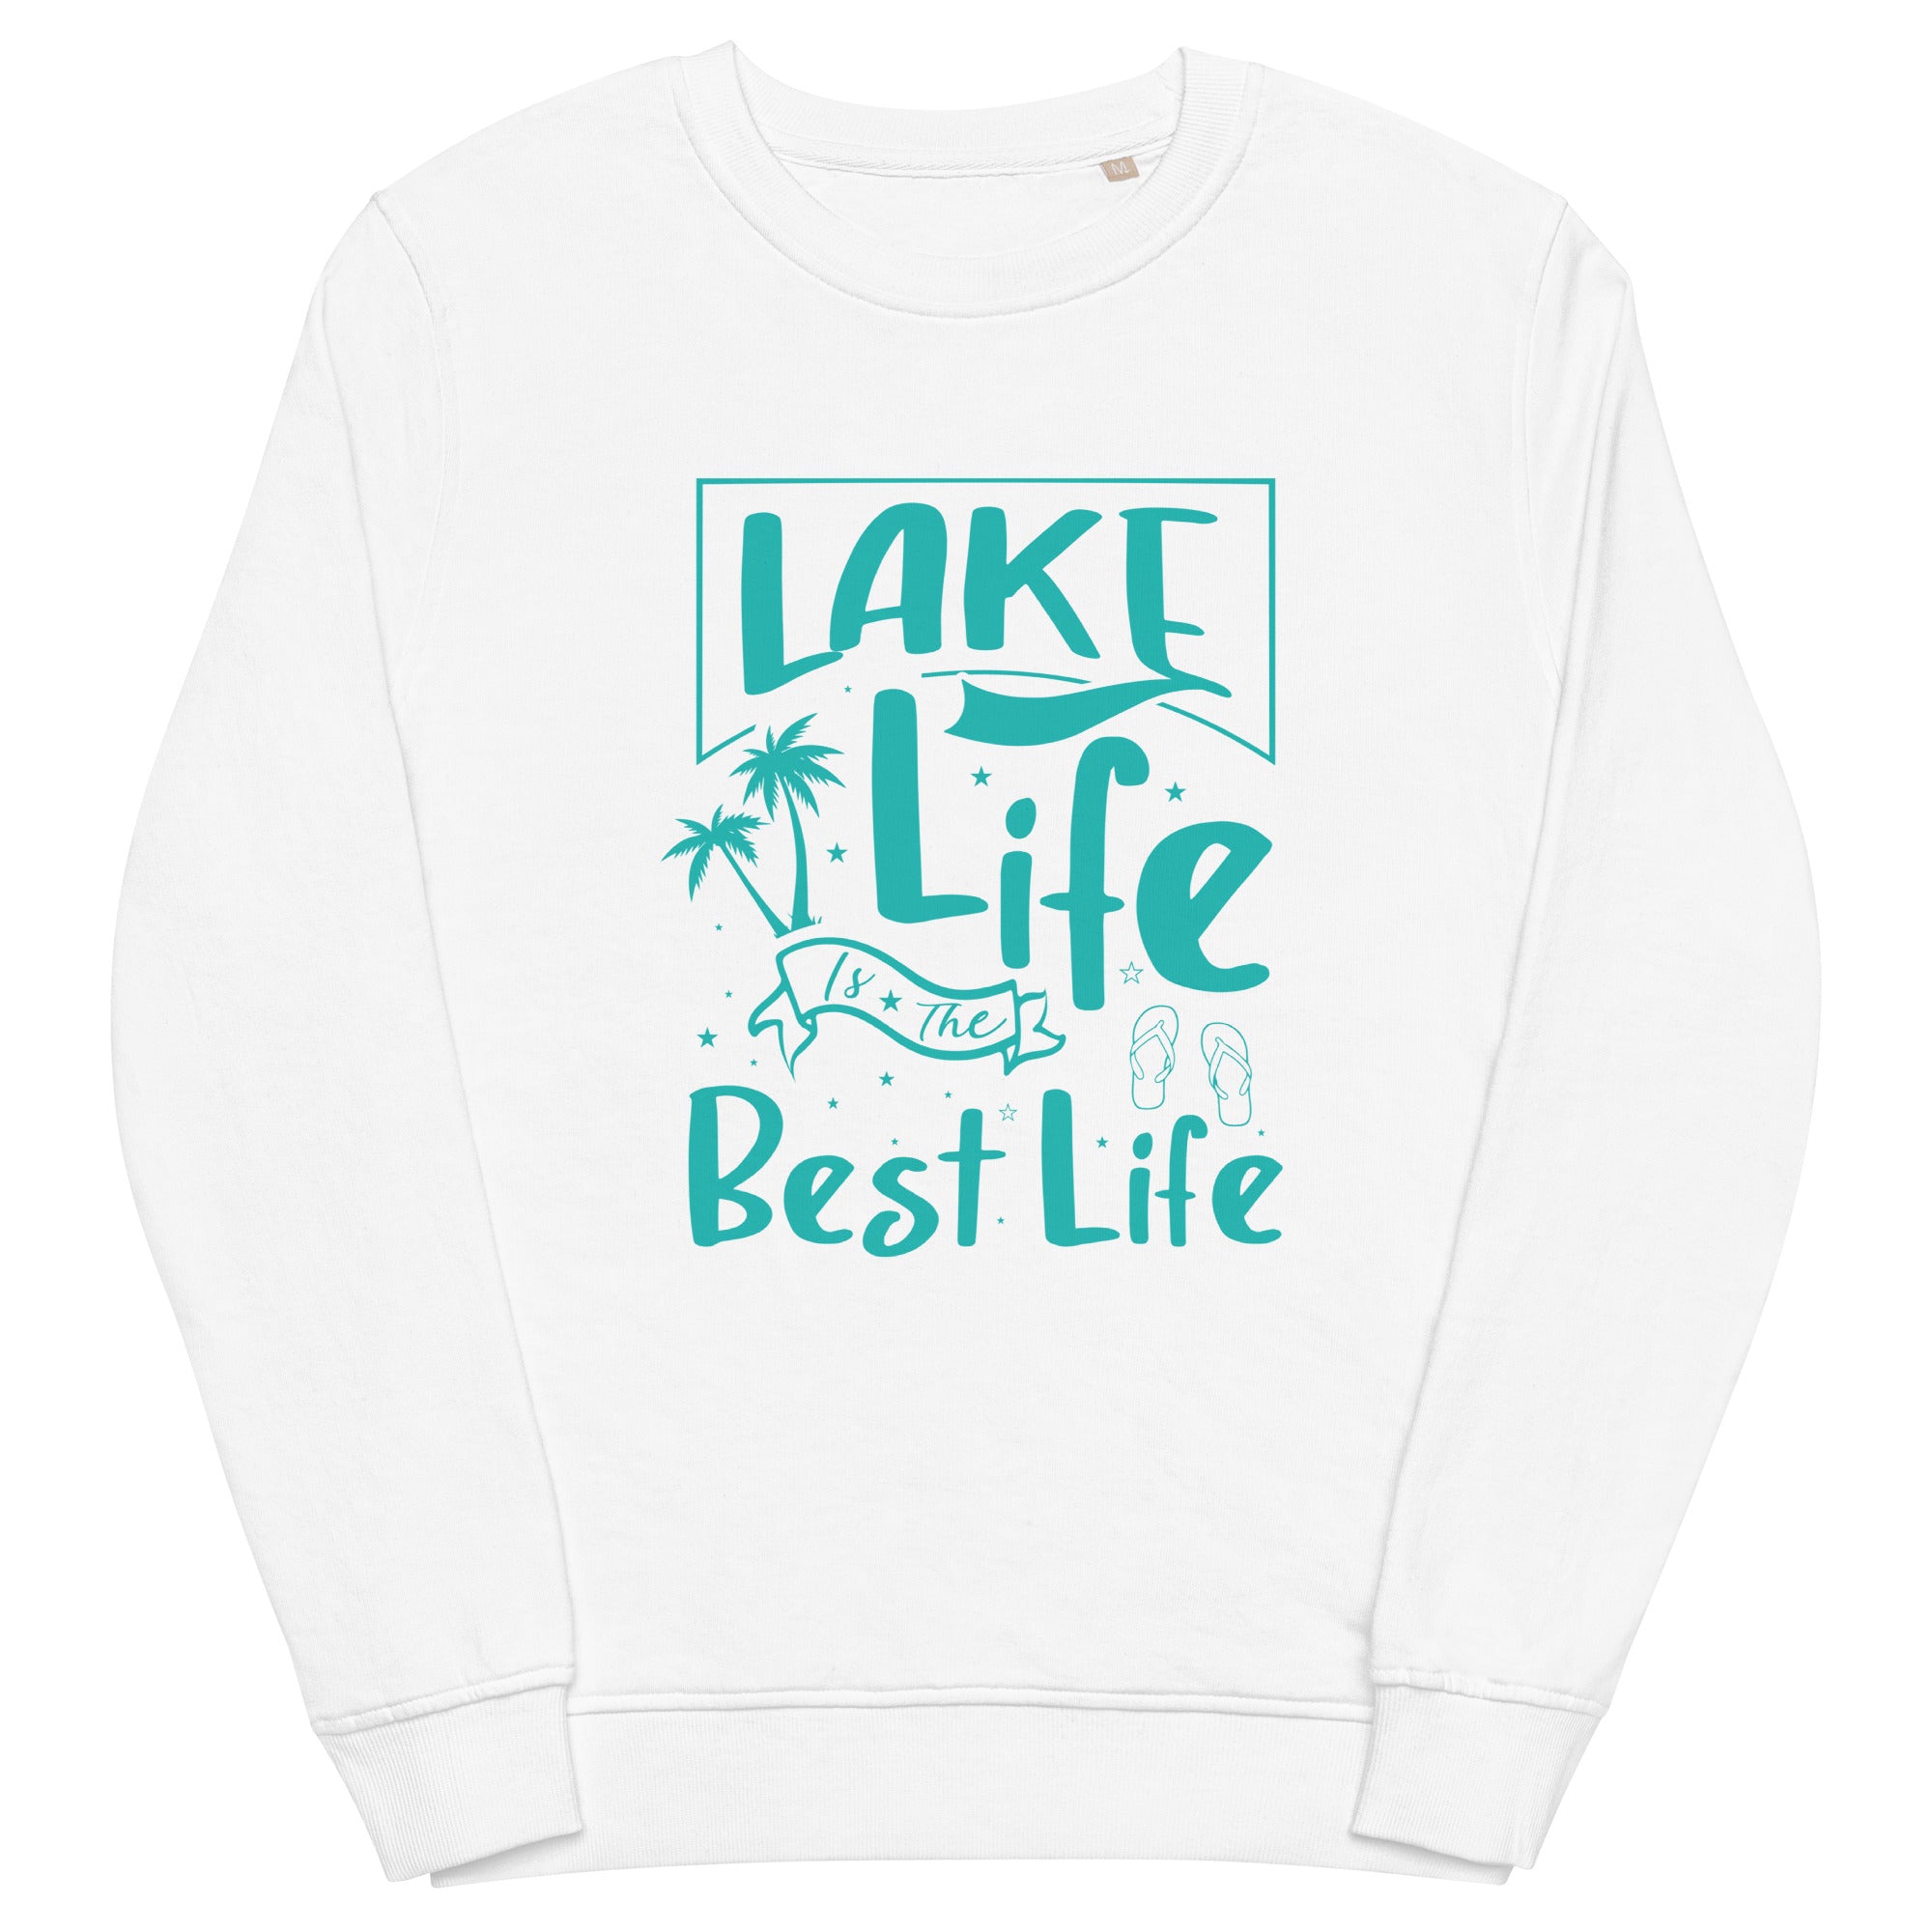 Lake Life Best Life - Sweatshirt